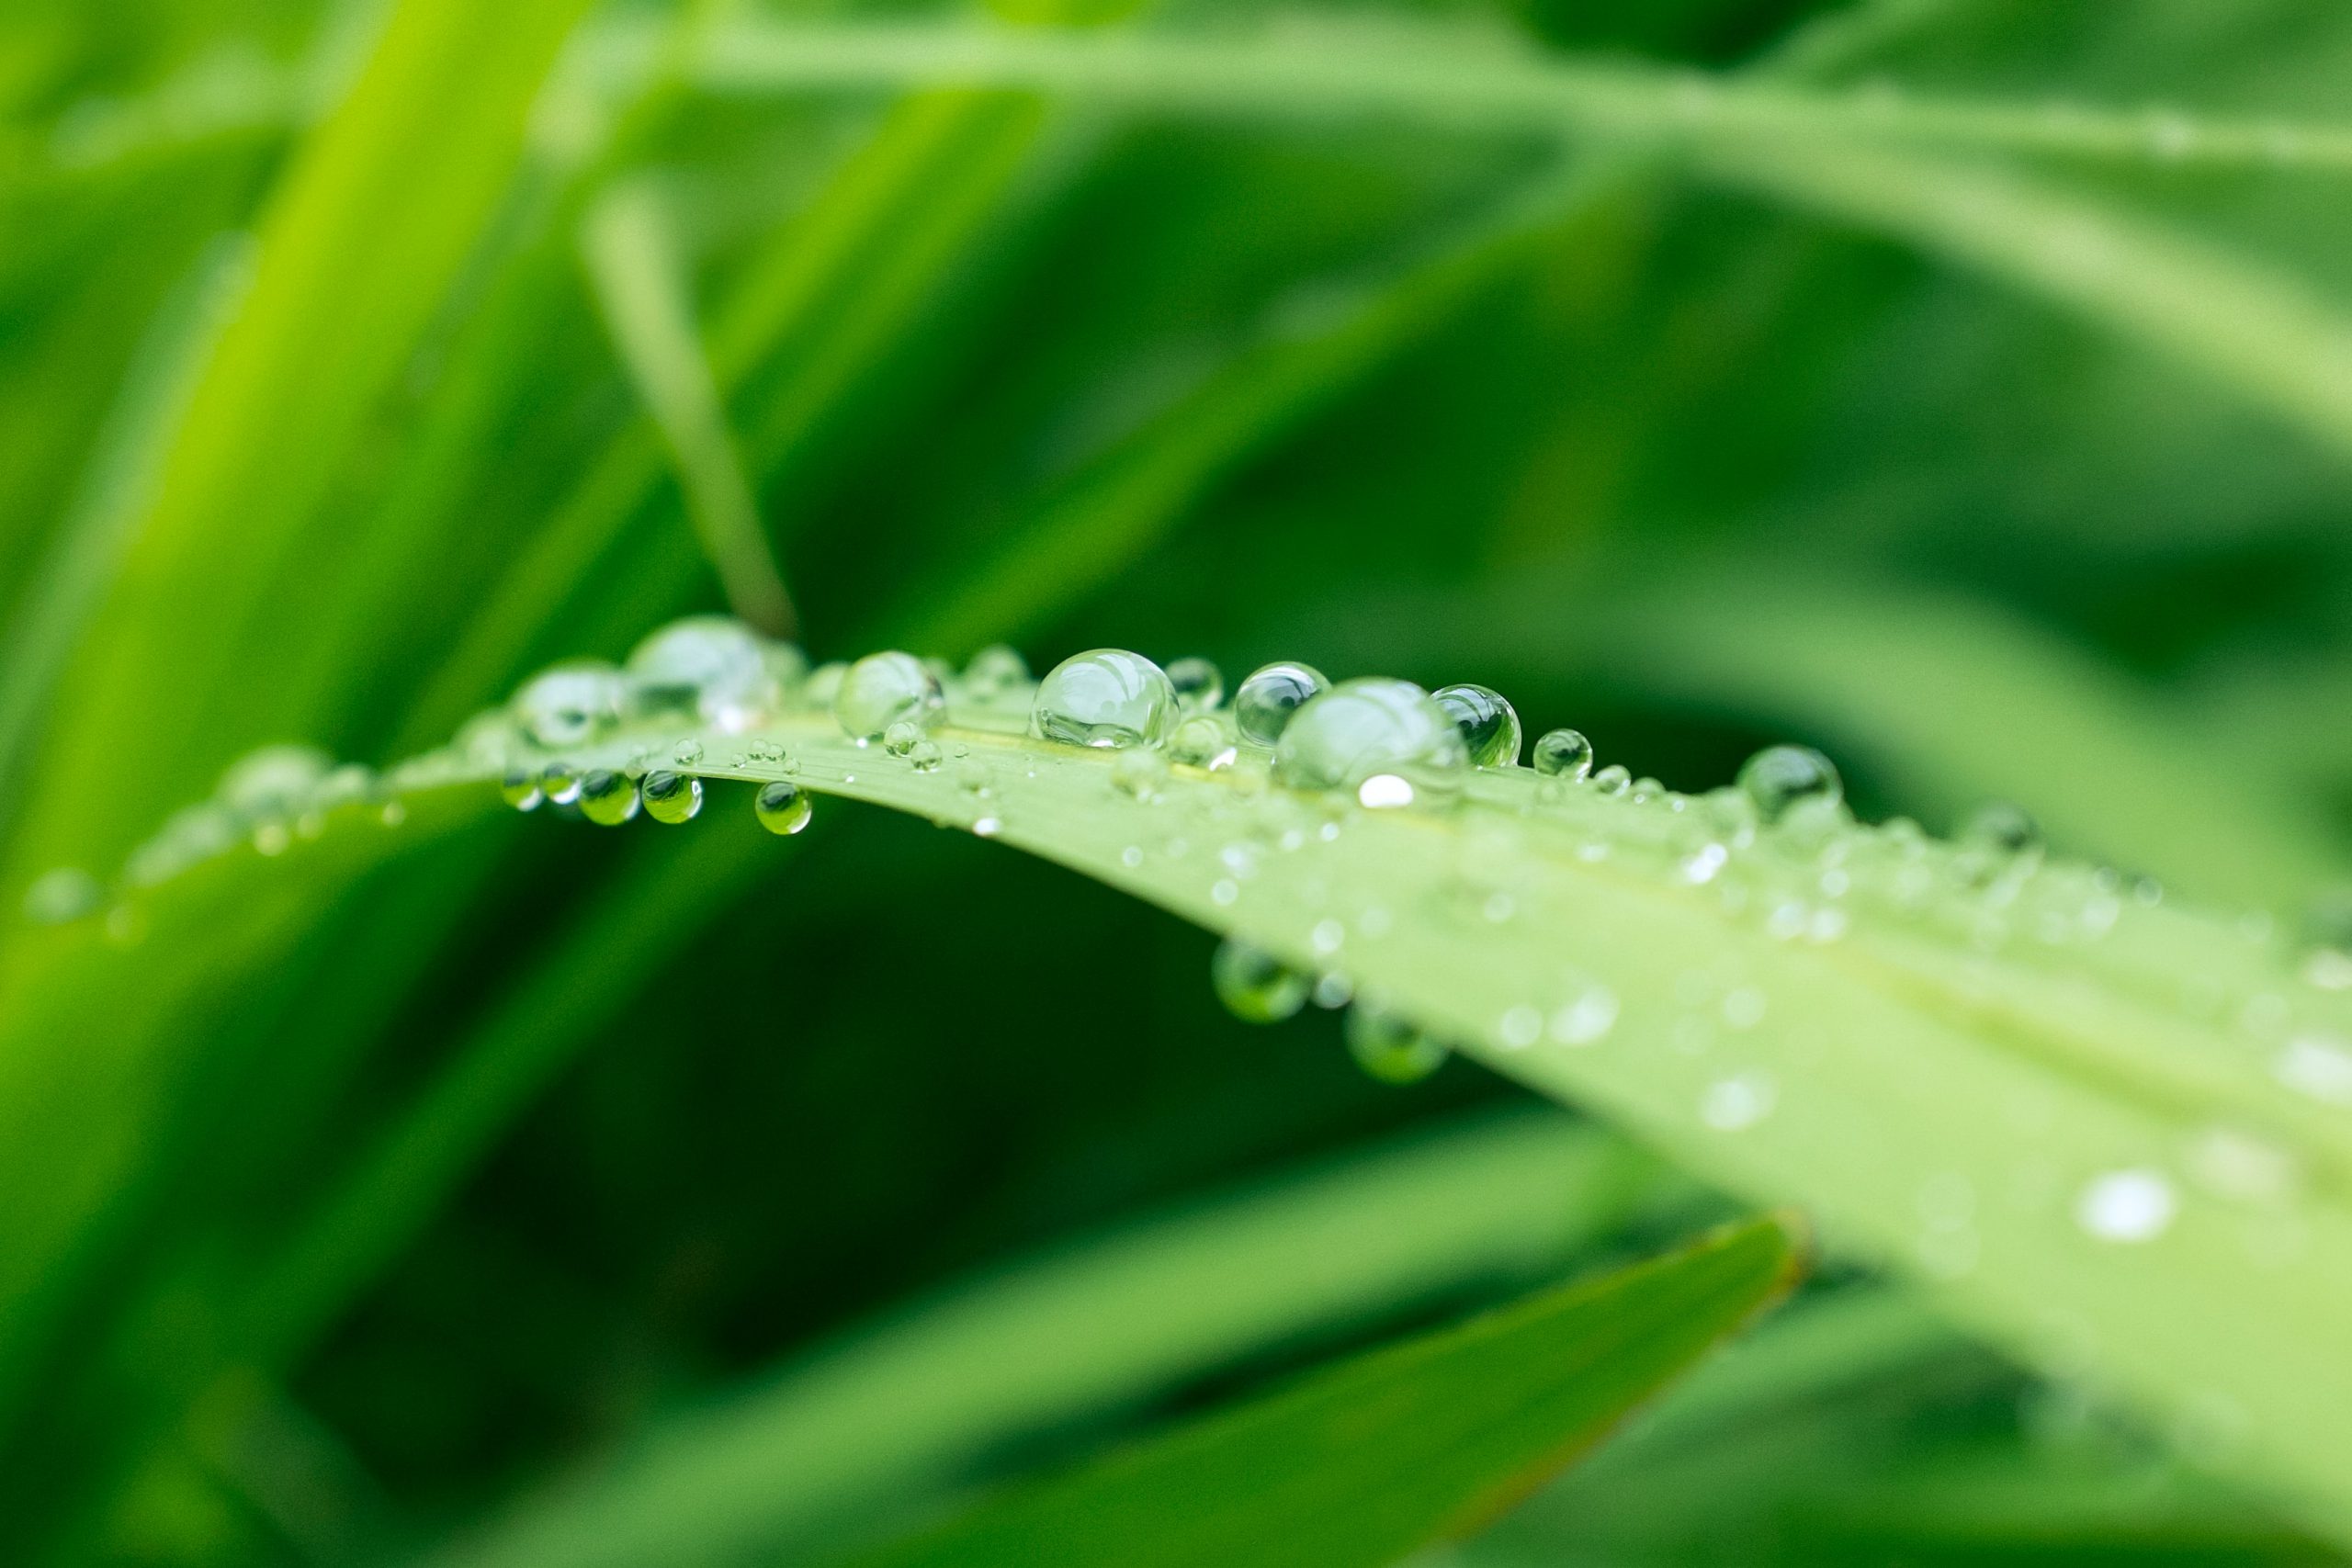 Rain droplets on grass blade